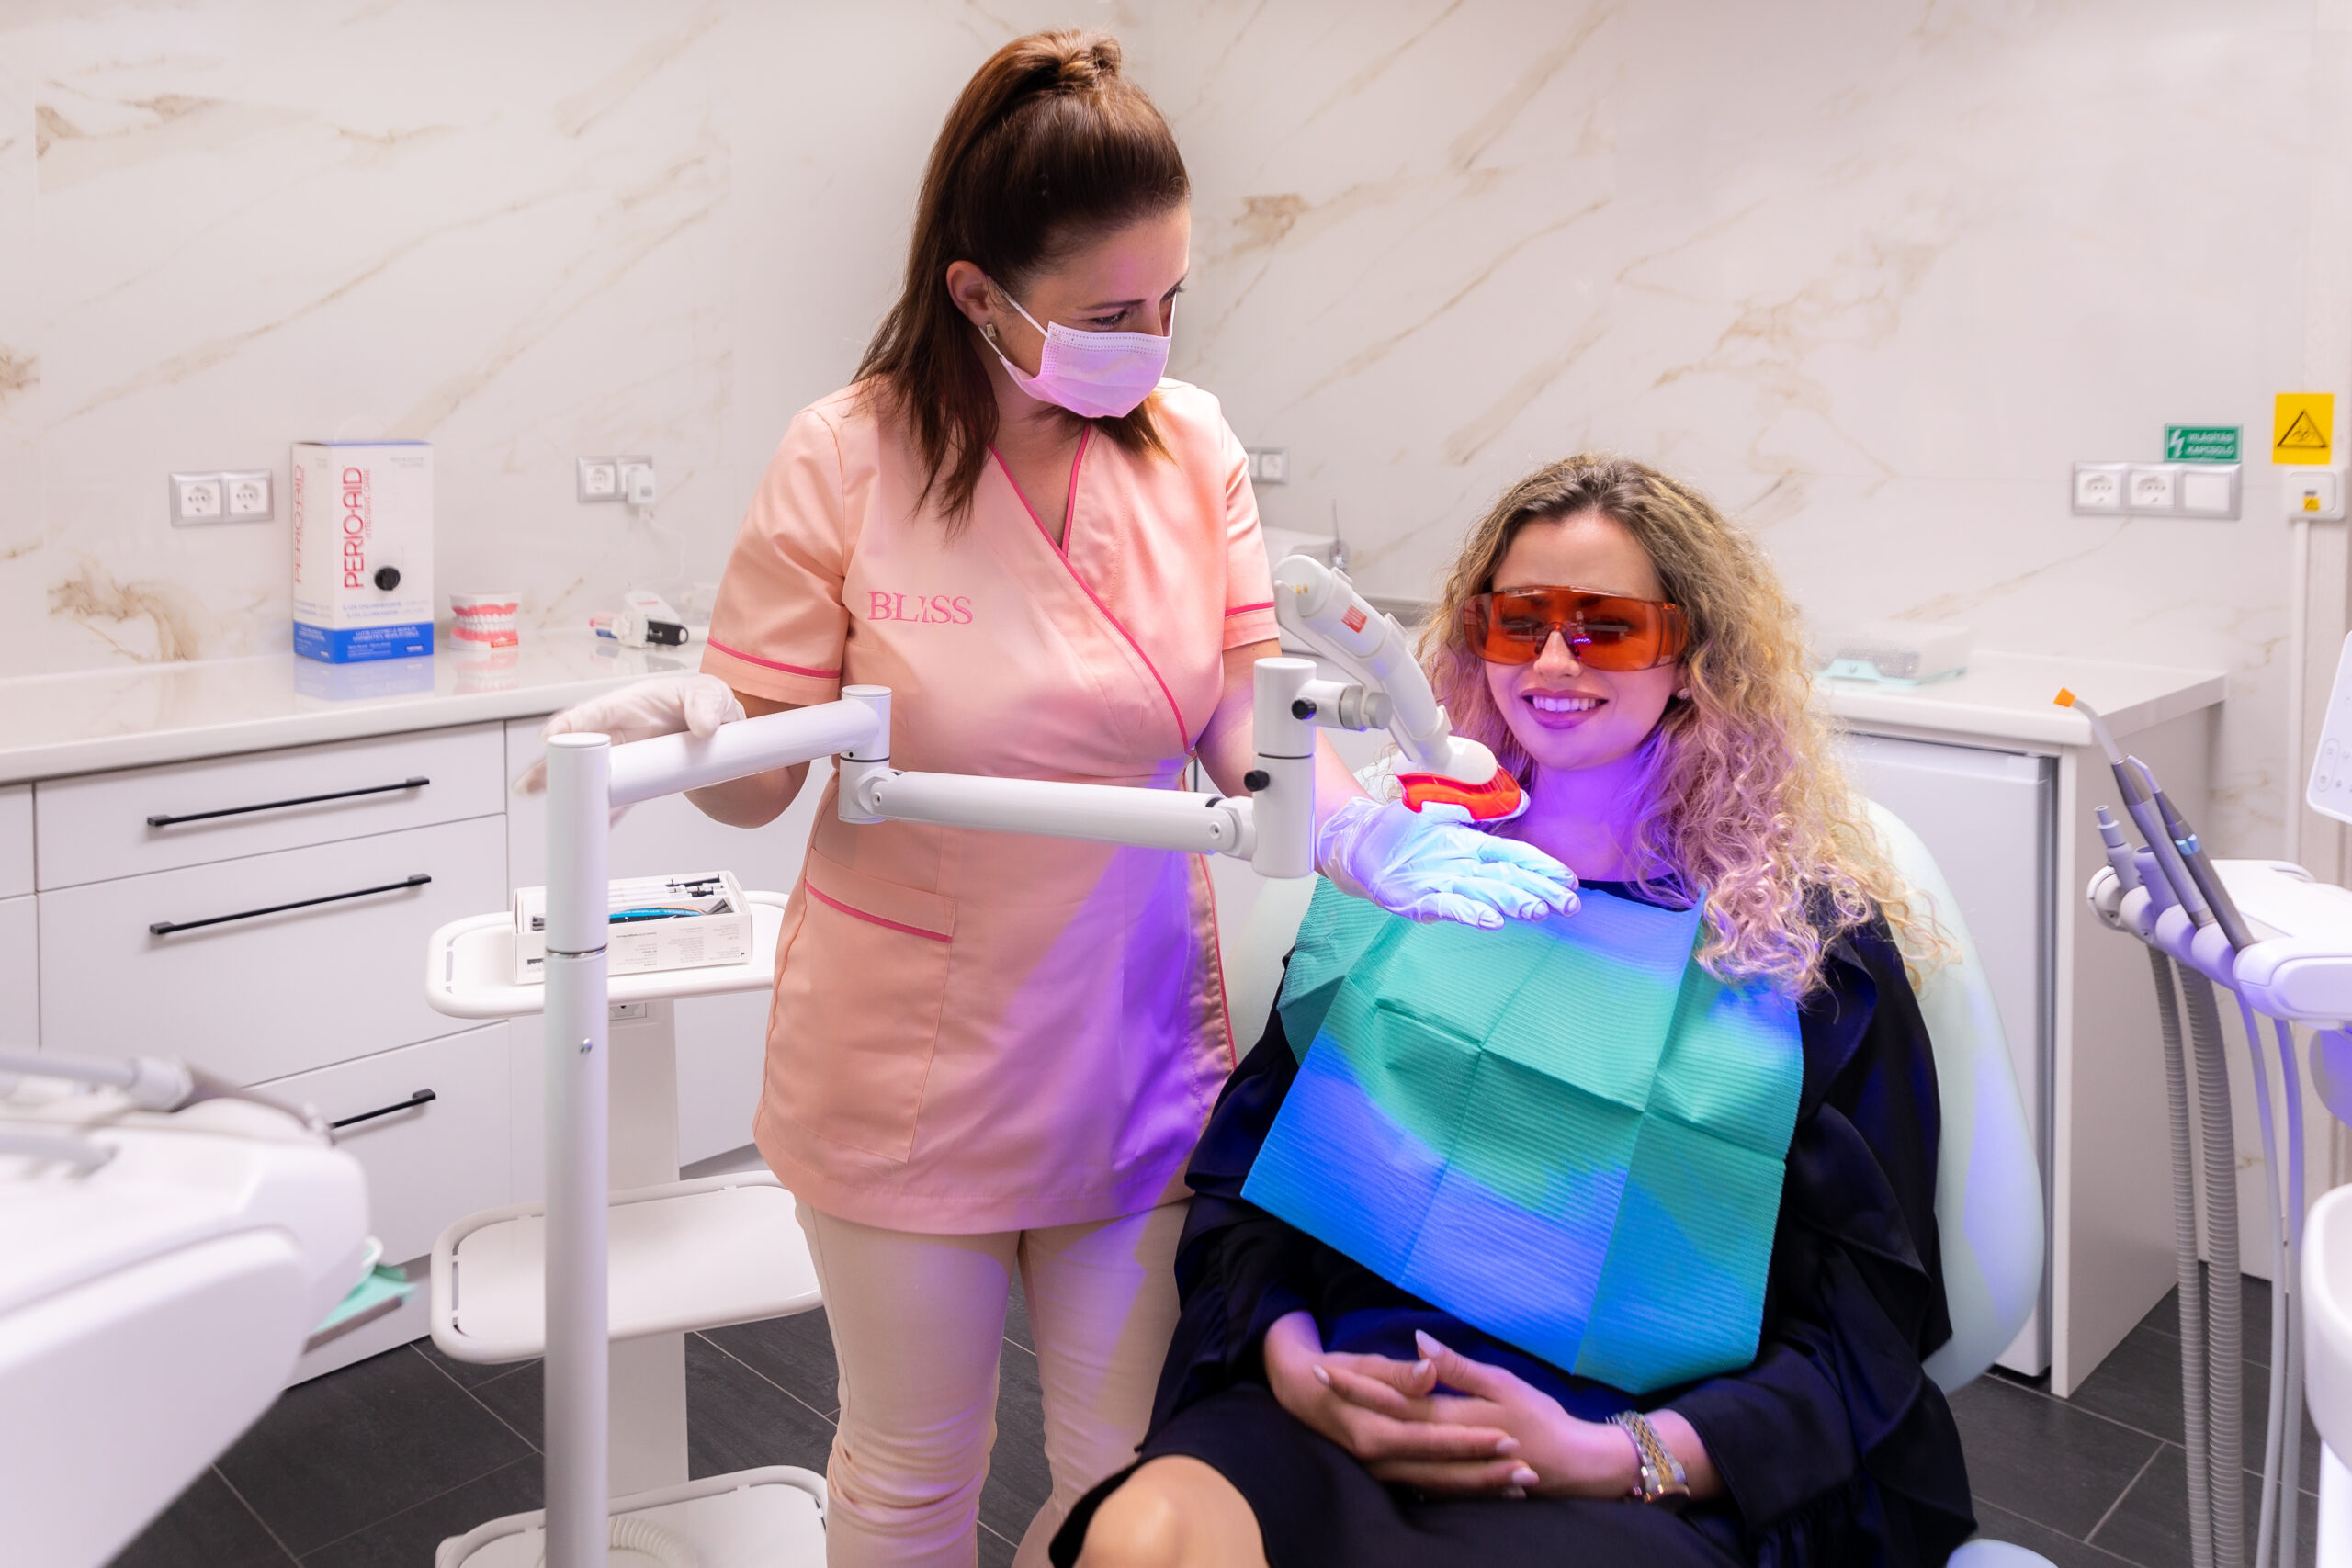 Bliss Dental fogászat Debrecen